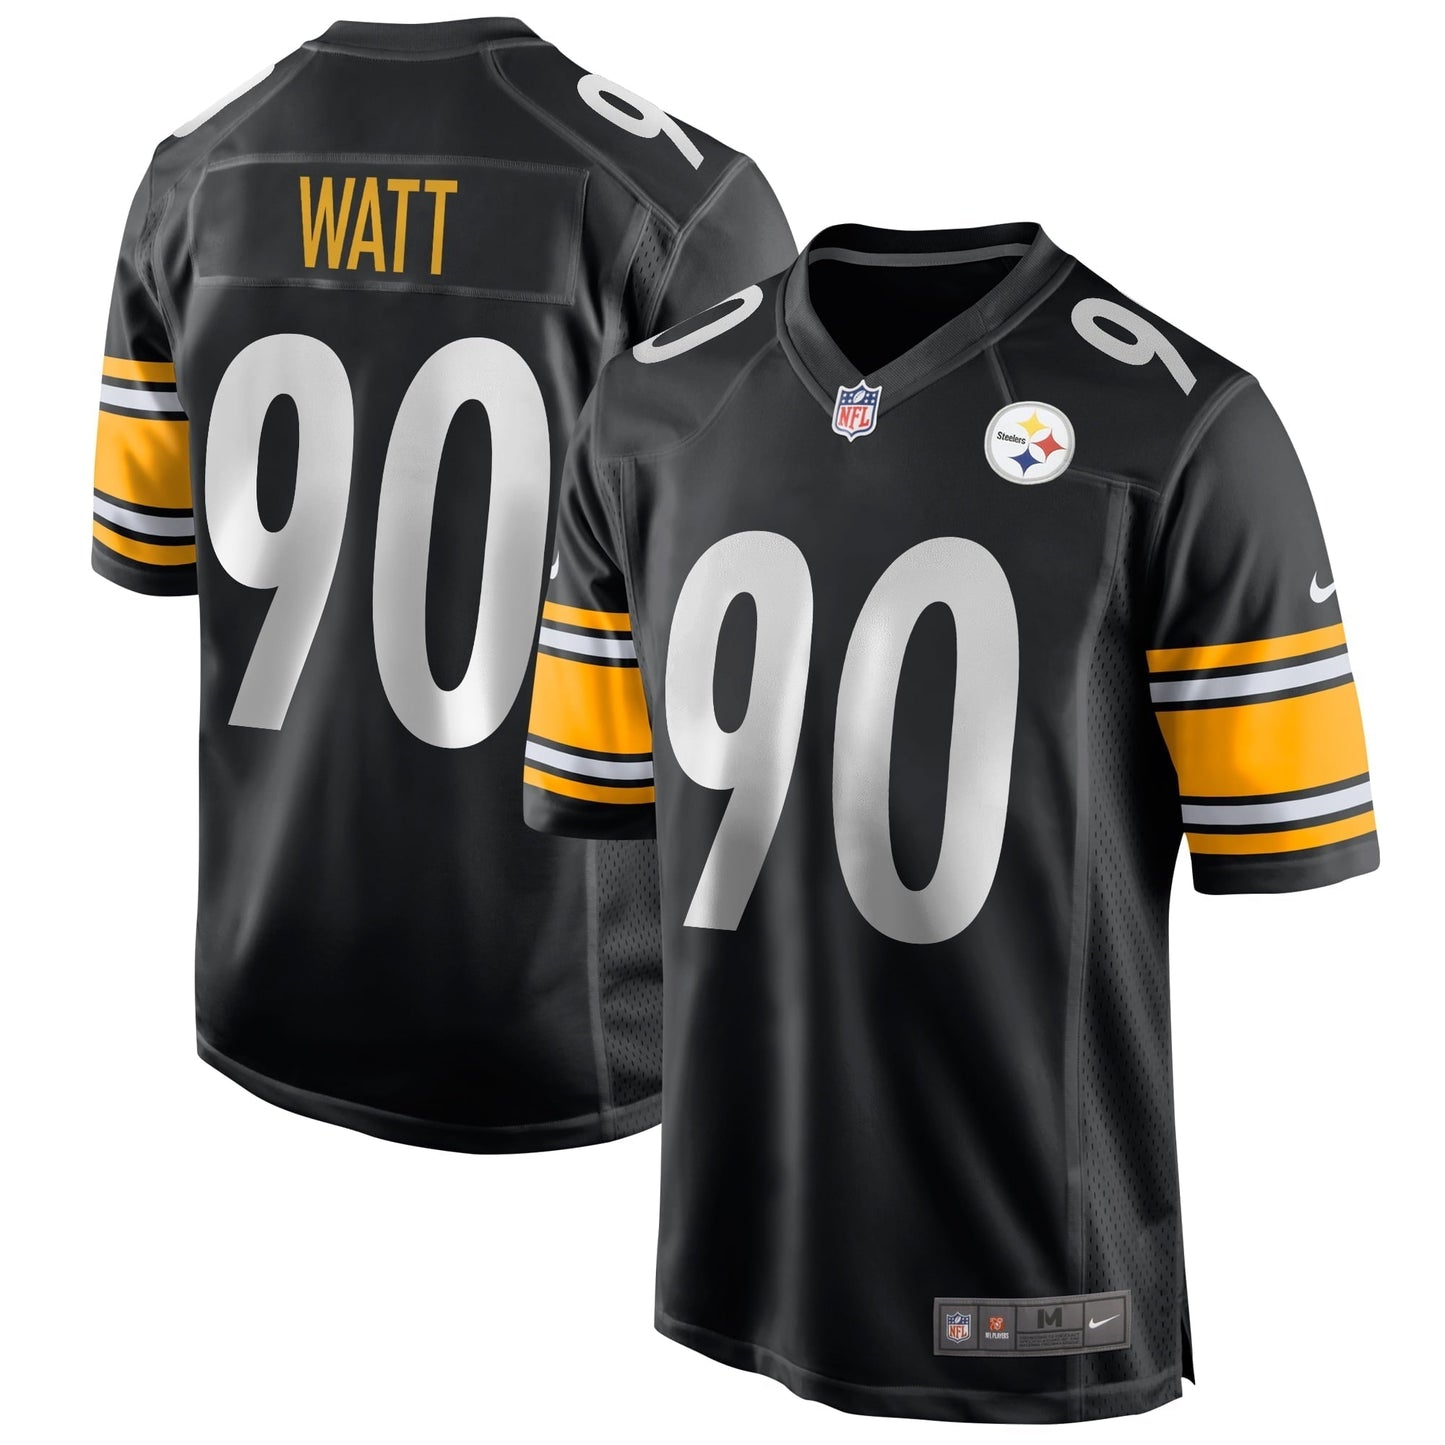 Men's Nike T.J. Watt Black Pittsburgh Steelers Game Jersey